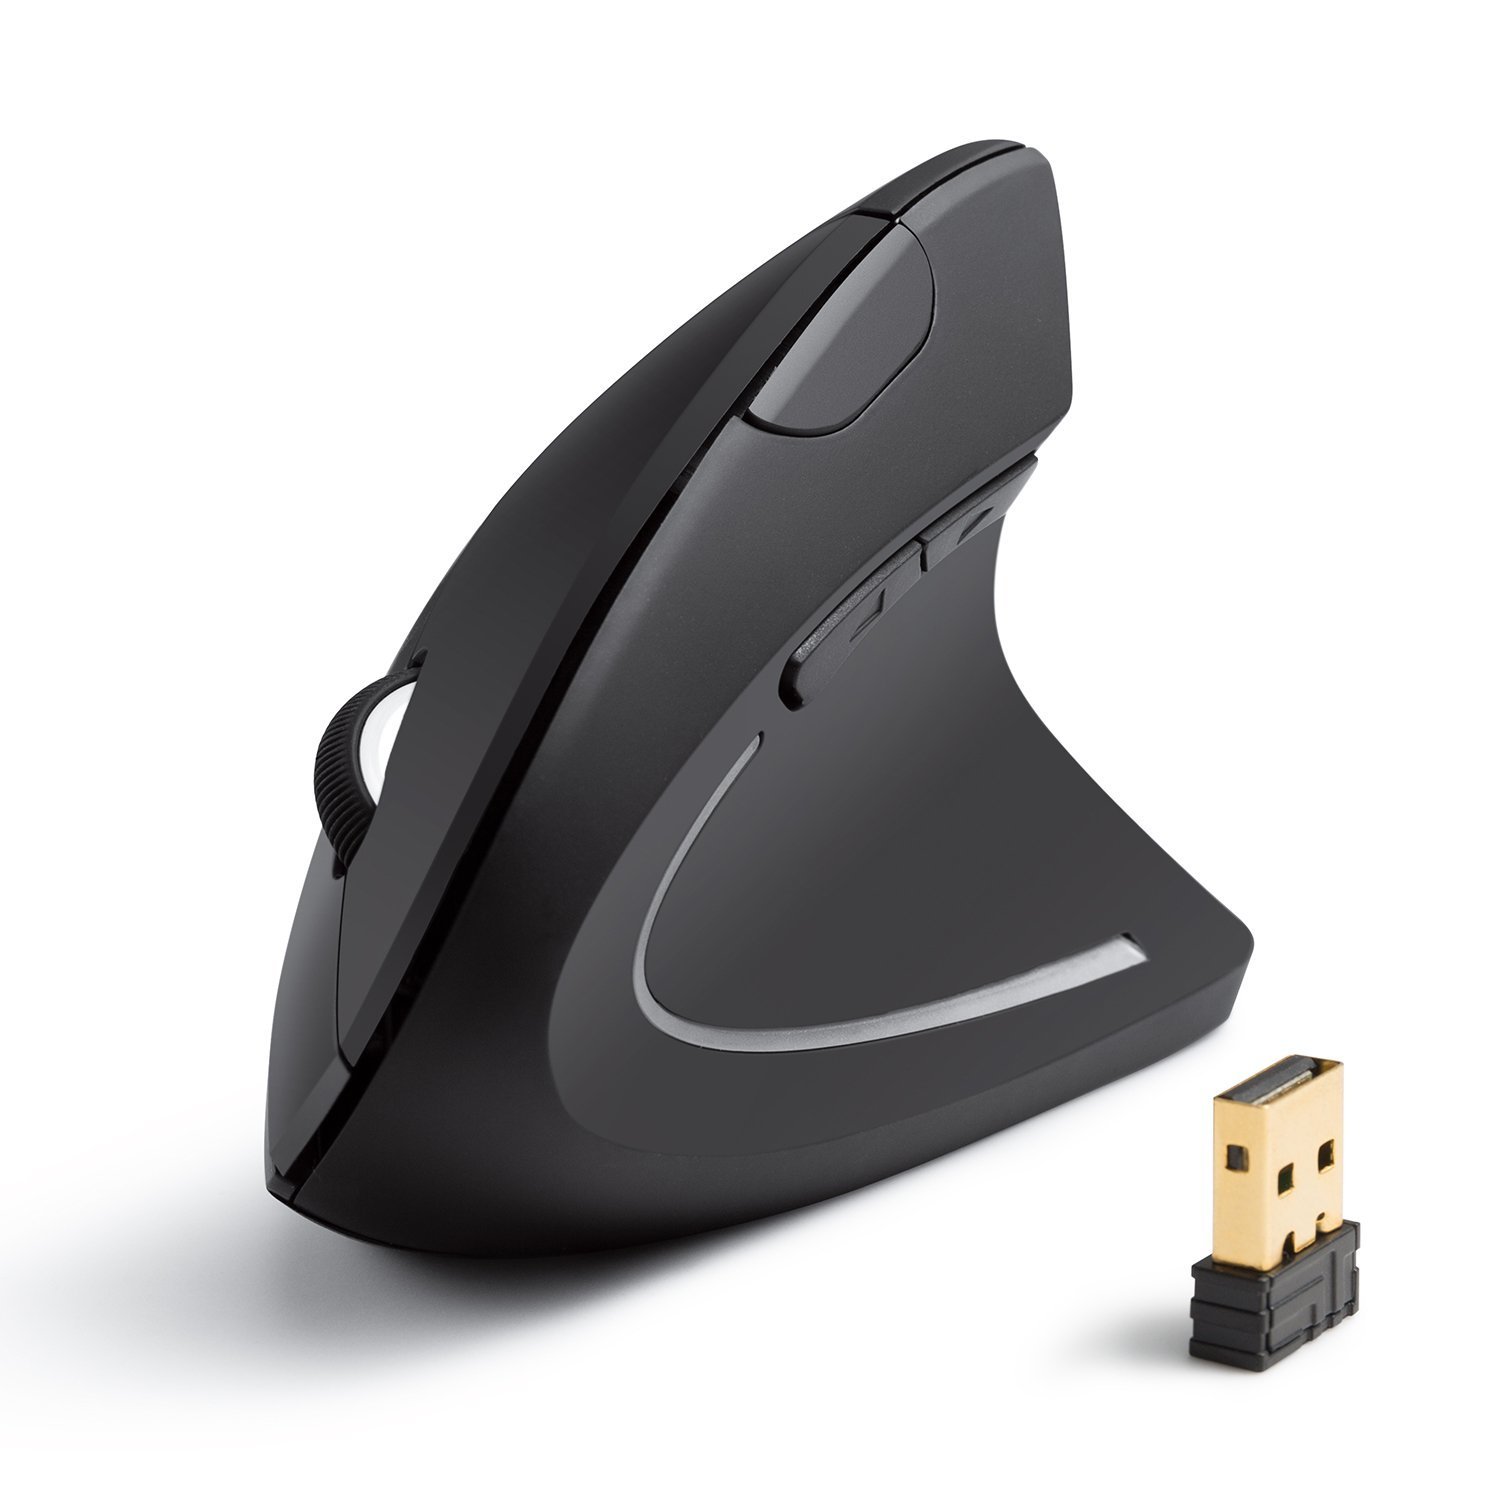 Best mouse for graphic designer - Anker Vertical Ergonomic Optical Mouse